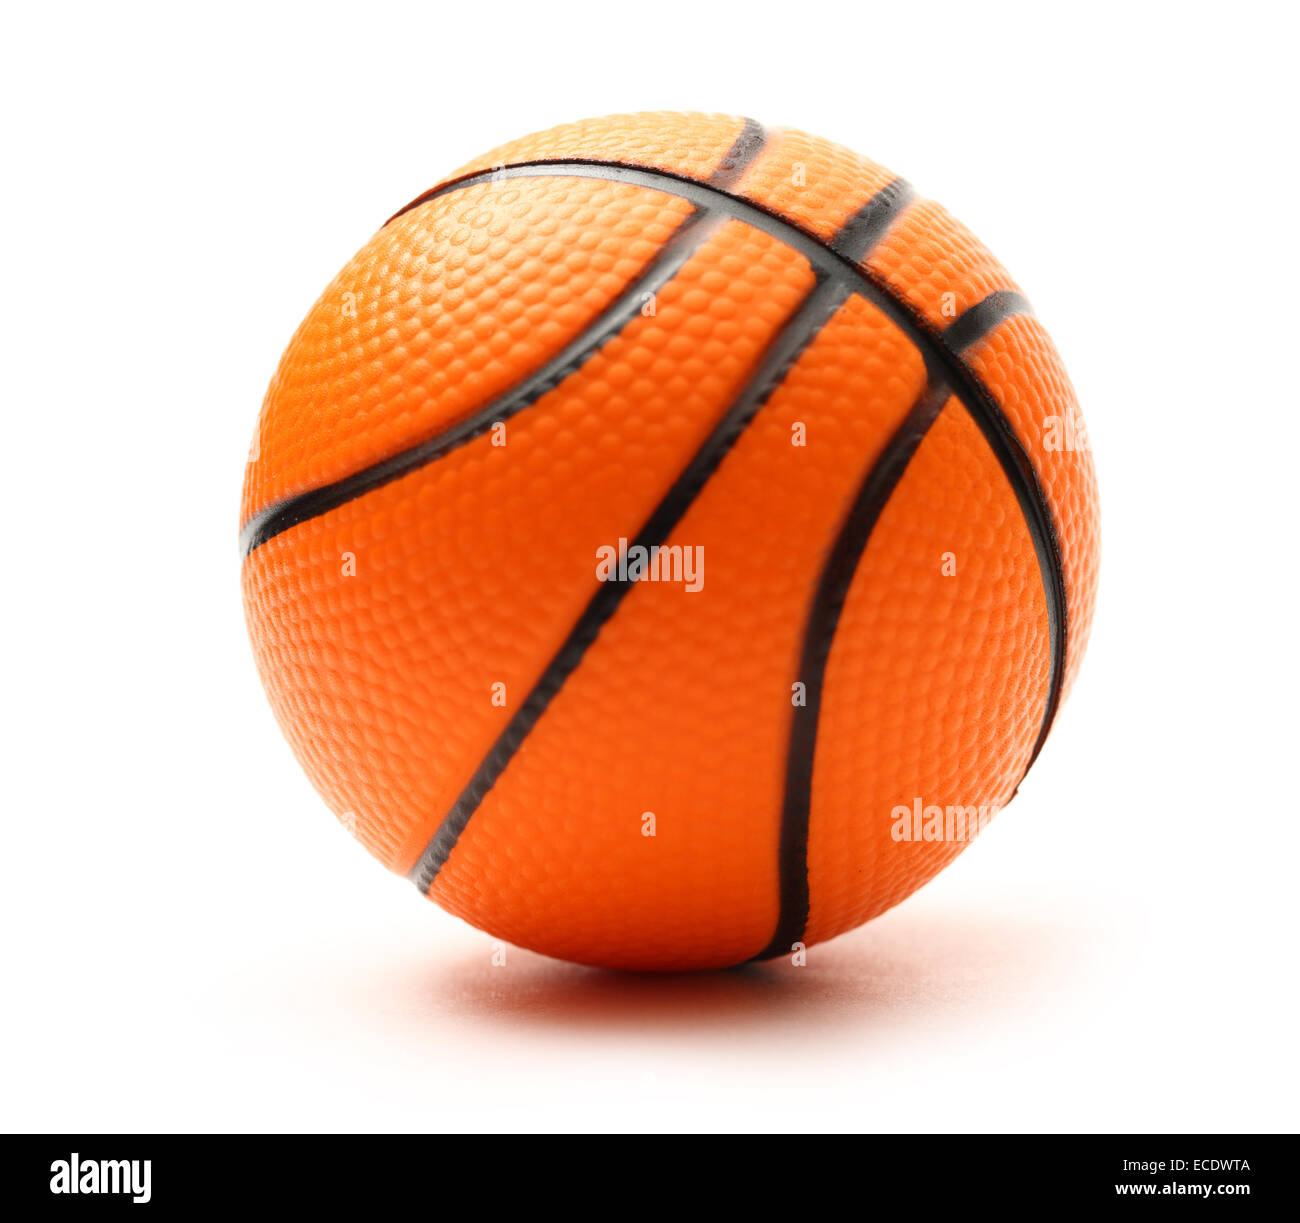 Basketball on the white background Stock Photo